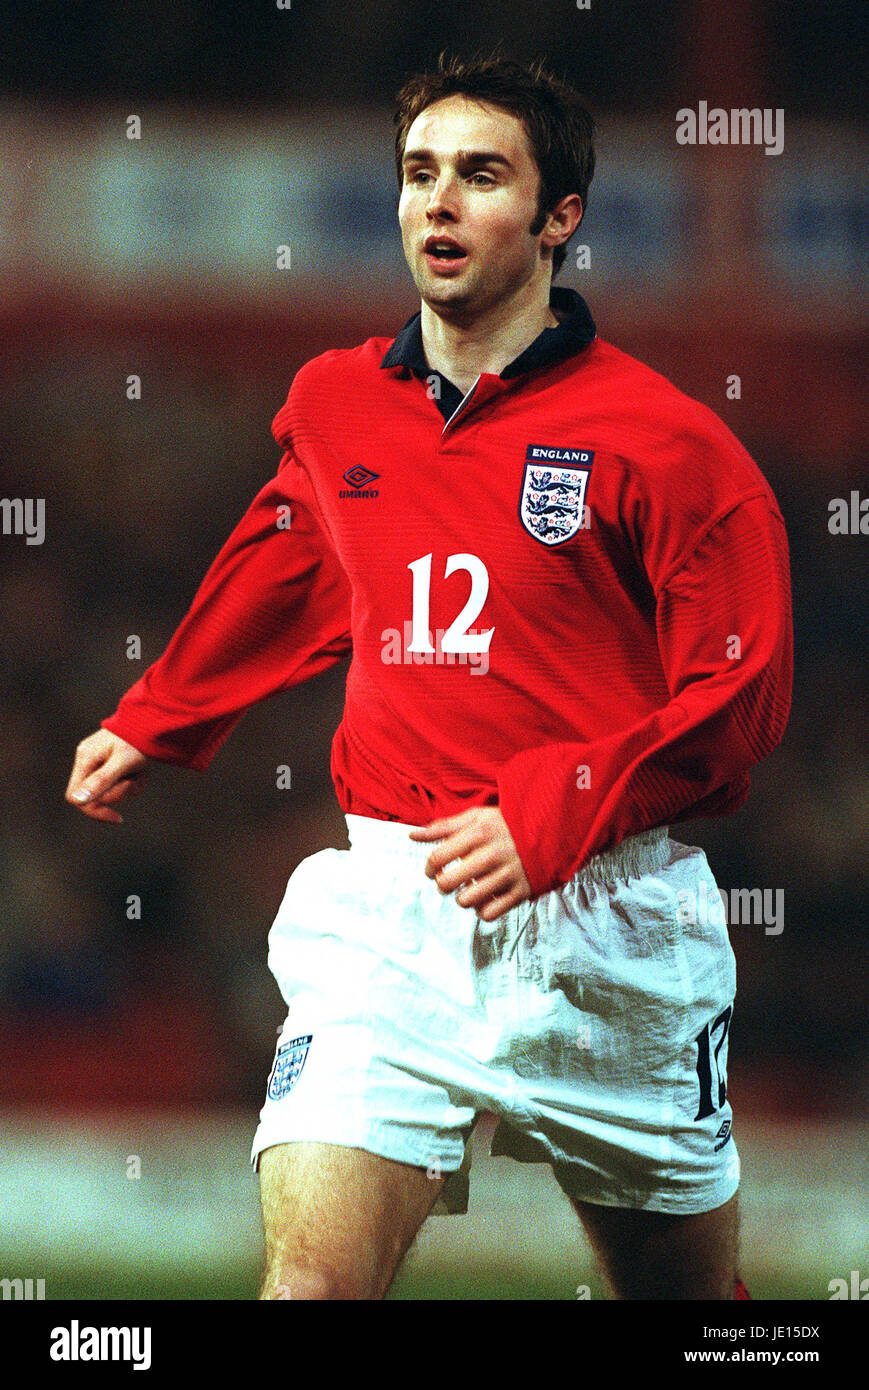 MARK WILSON  . ENGLAND U21 & MANCHESTER UTD OAKLEY BARNSLEY ENGLAND 23 March 2001 Stock Photo